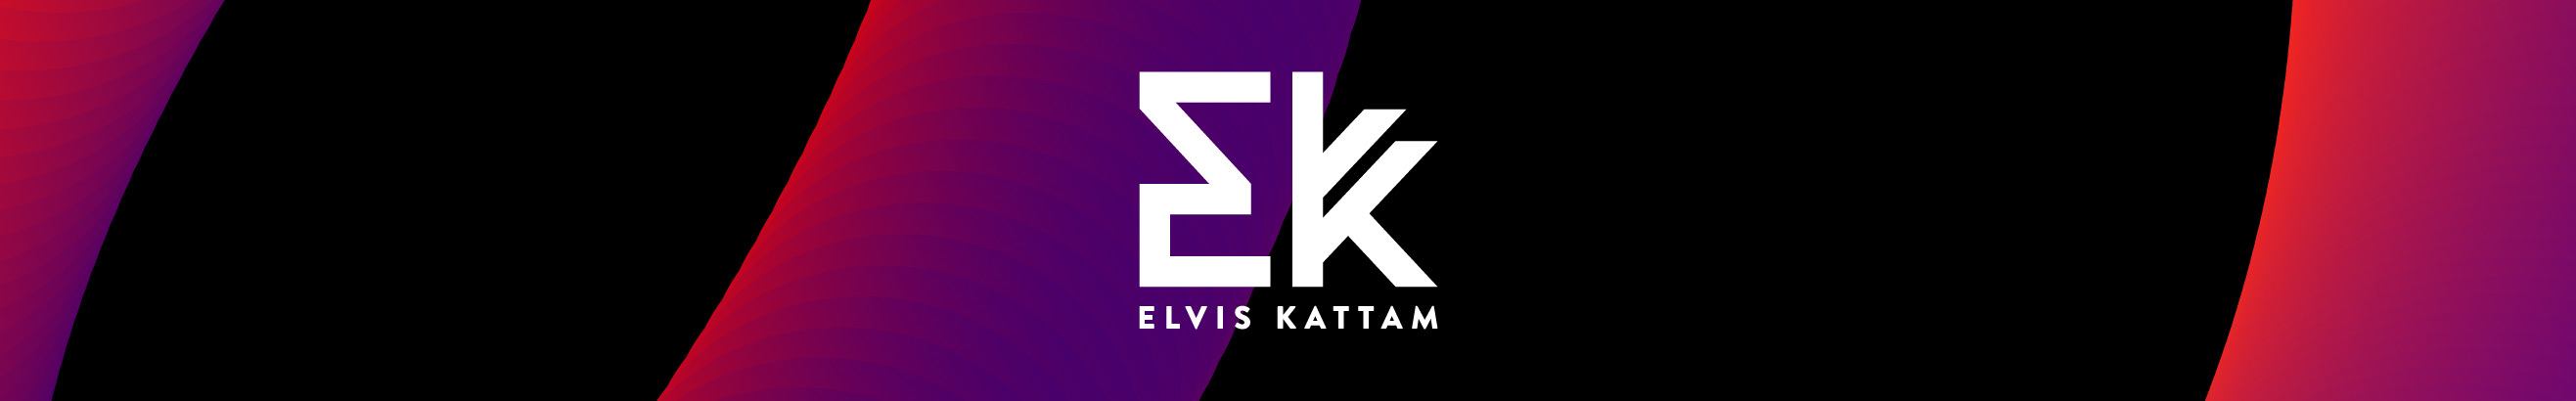 Elvis Kattams profilbanner